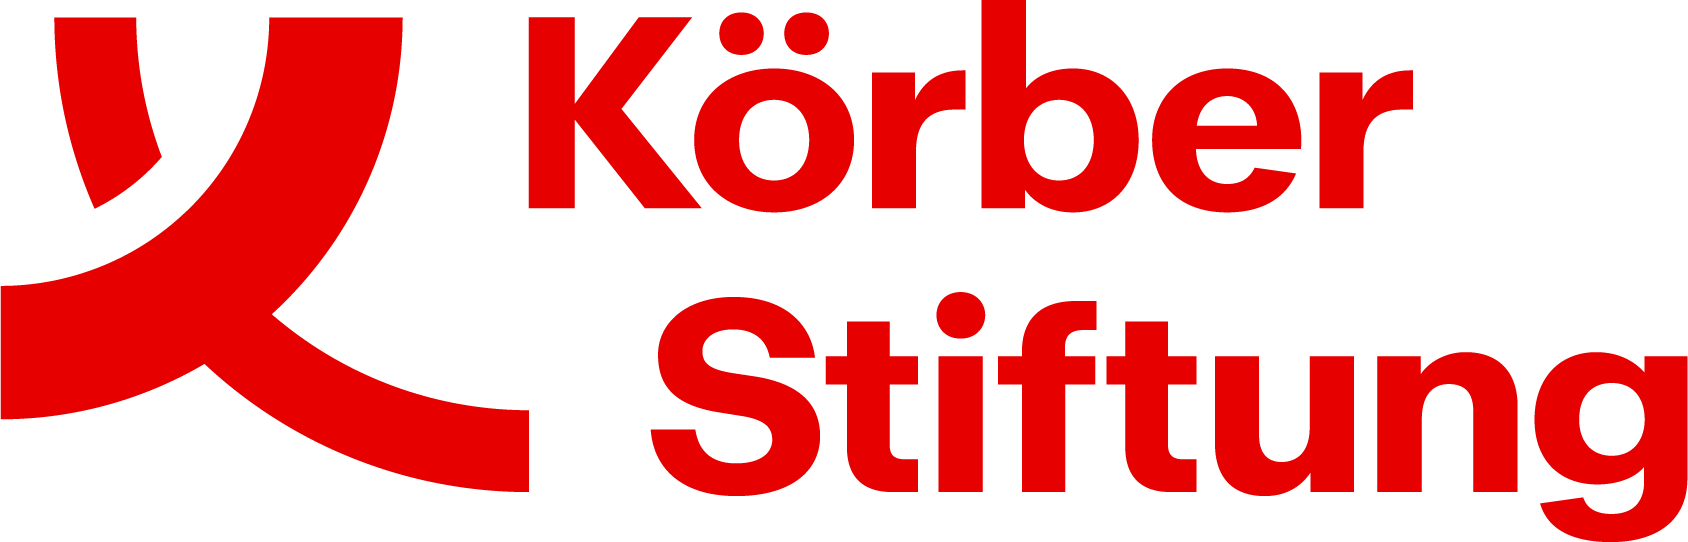 Logo Körber Stiftung